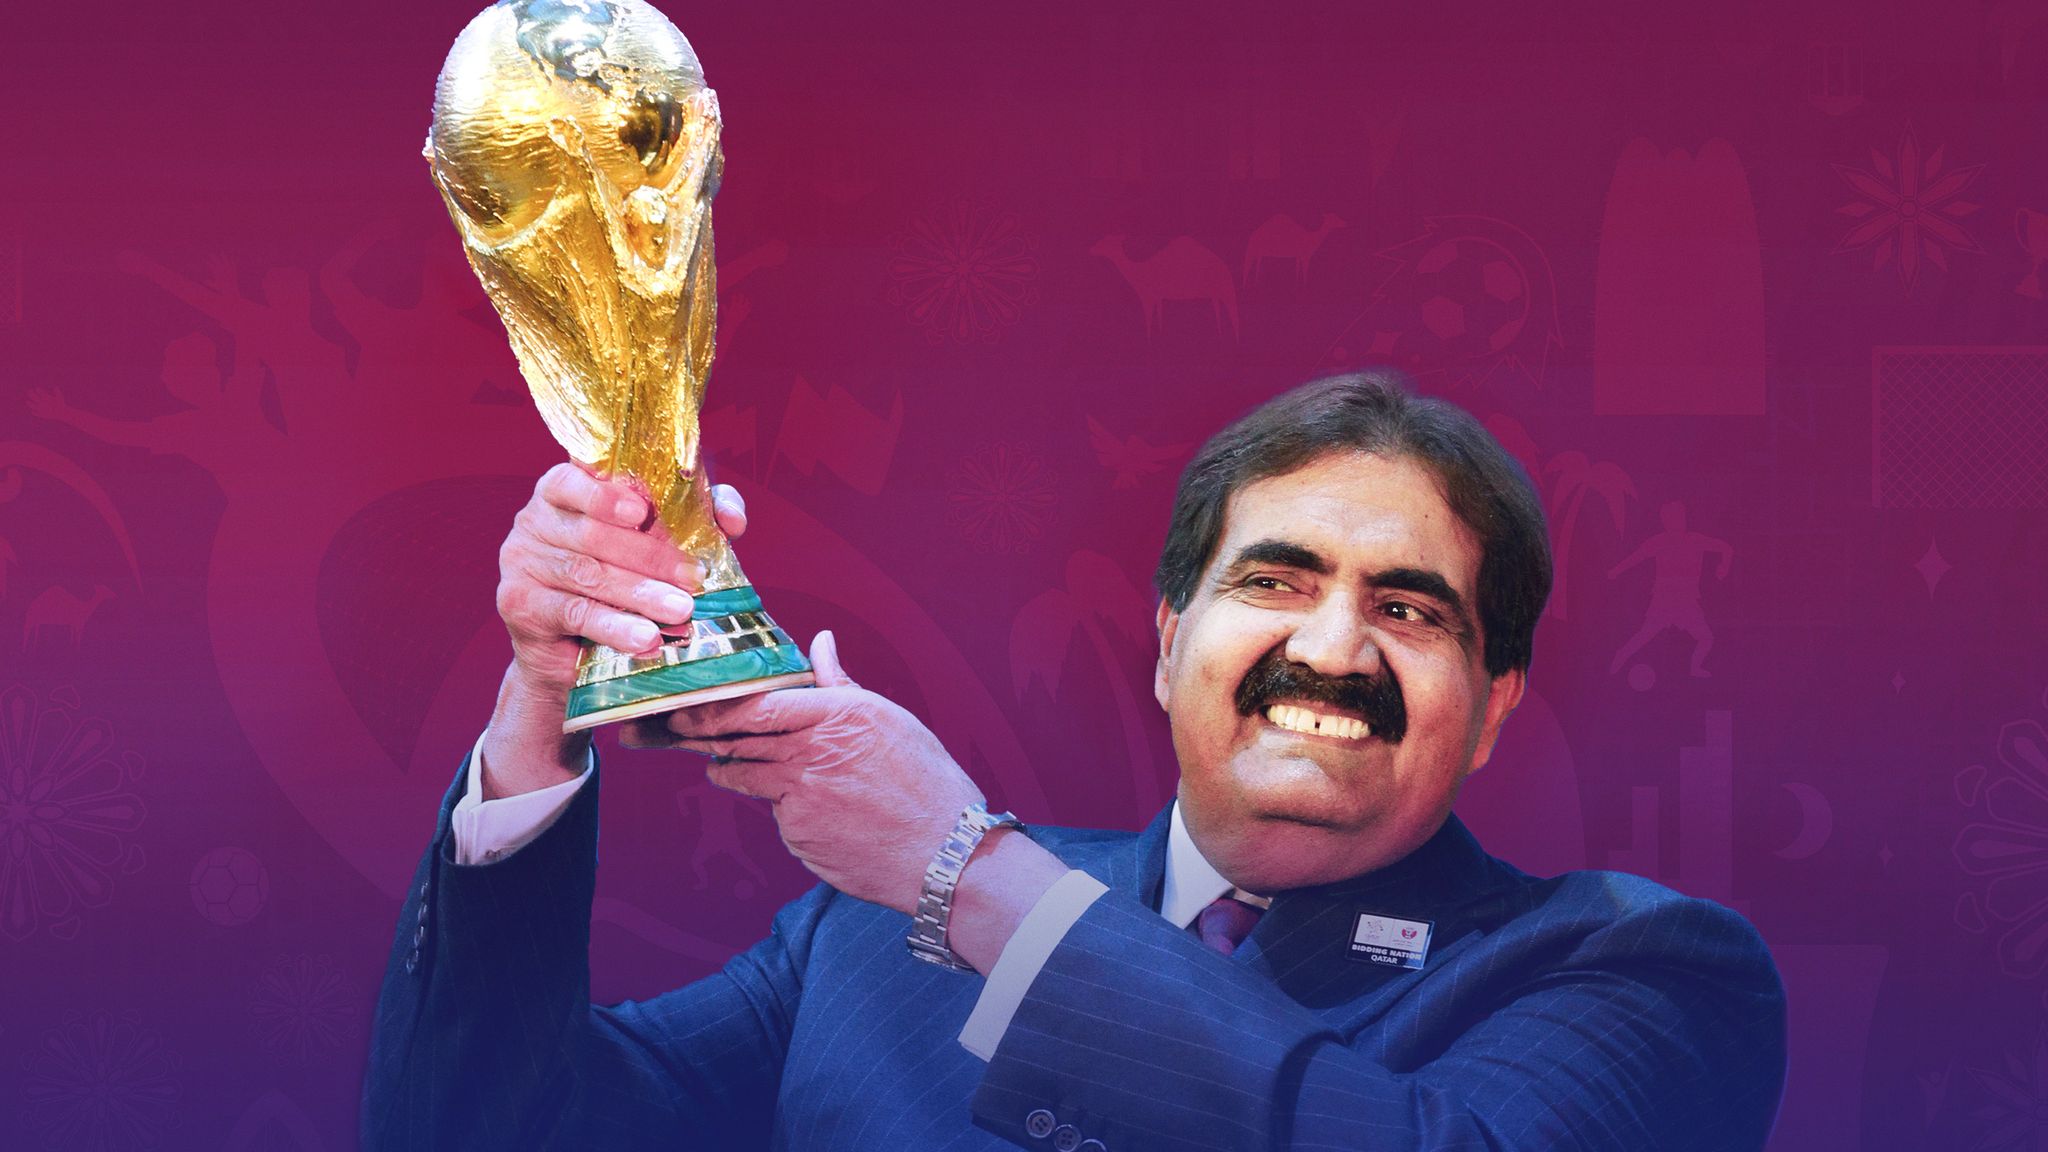 Qatar World Cup 2022, World Cup News